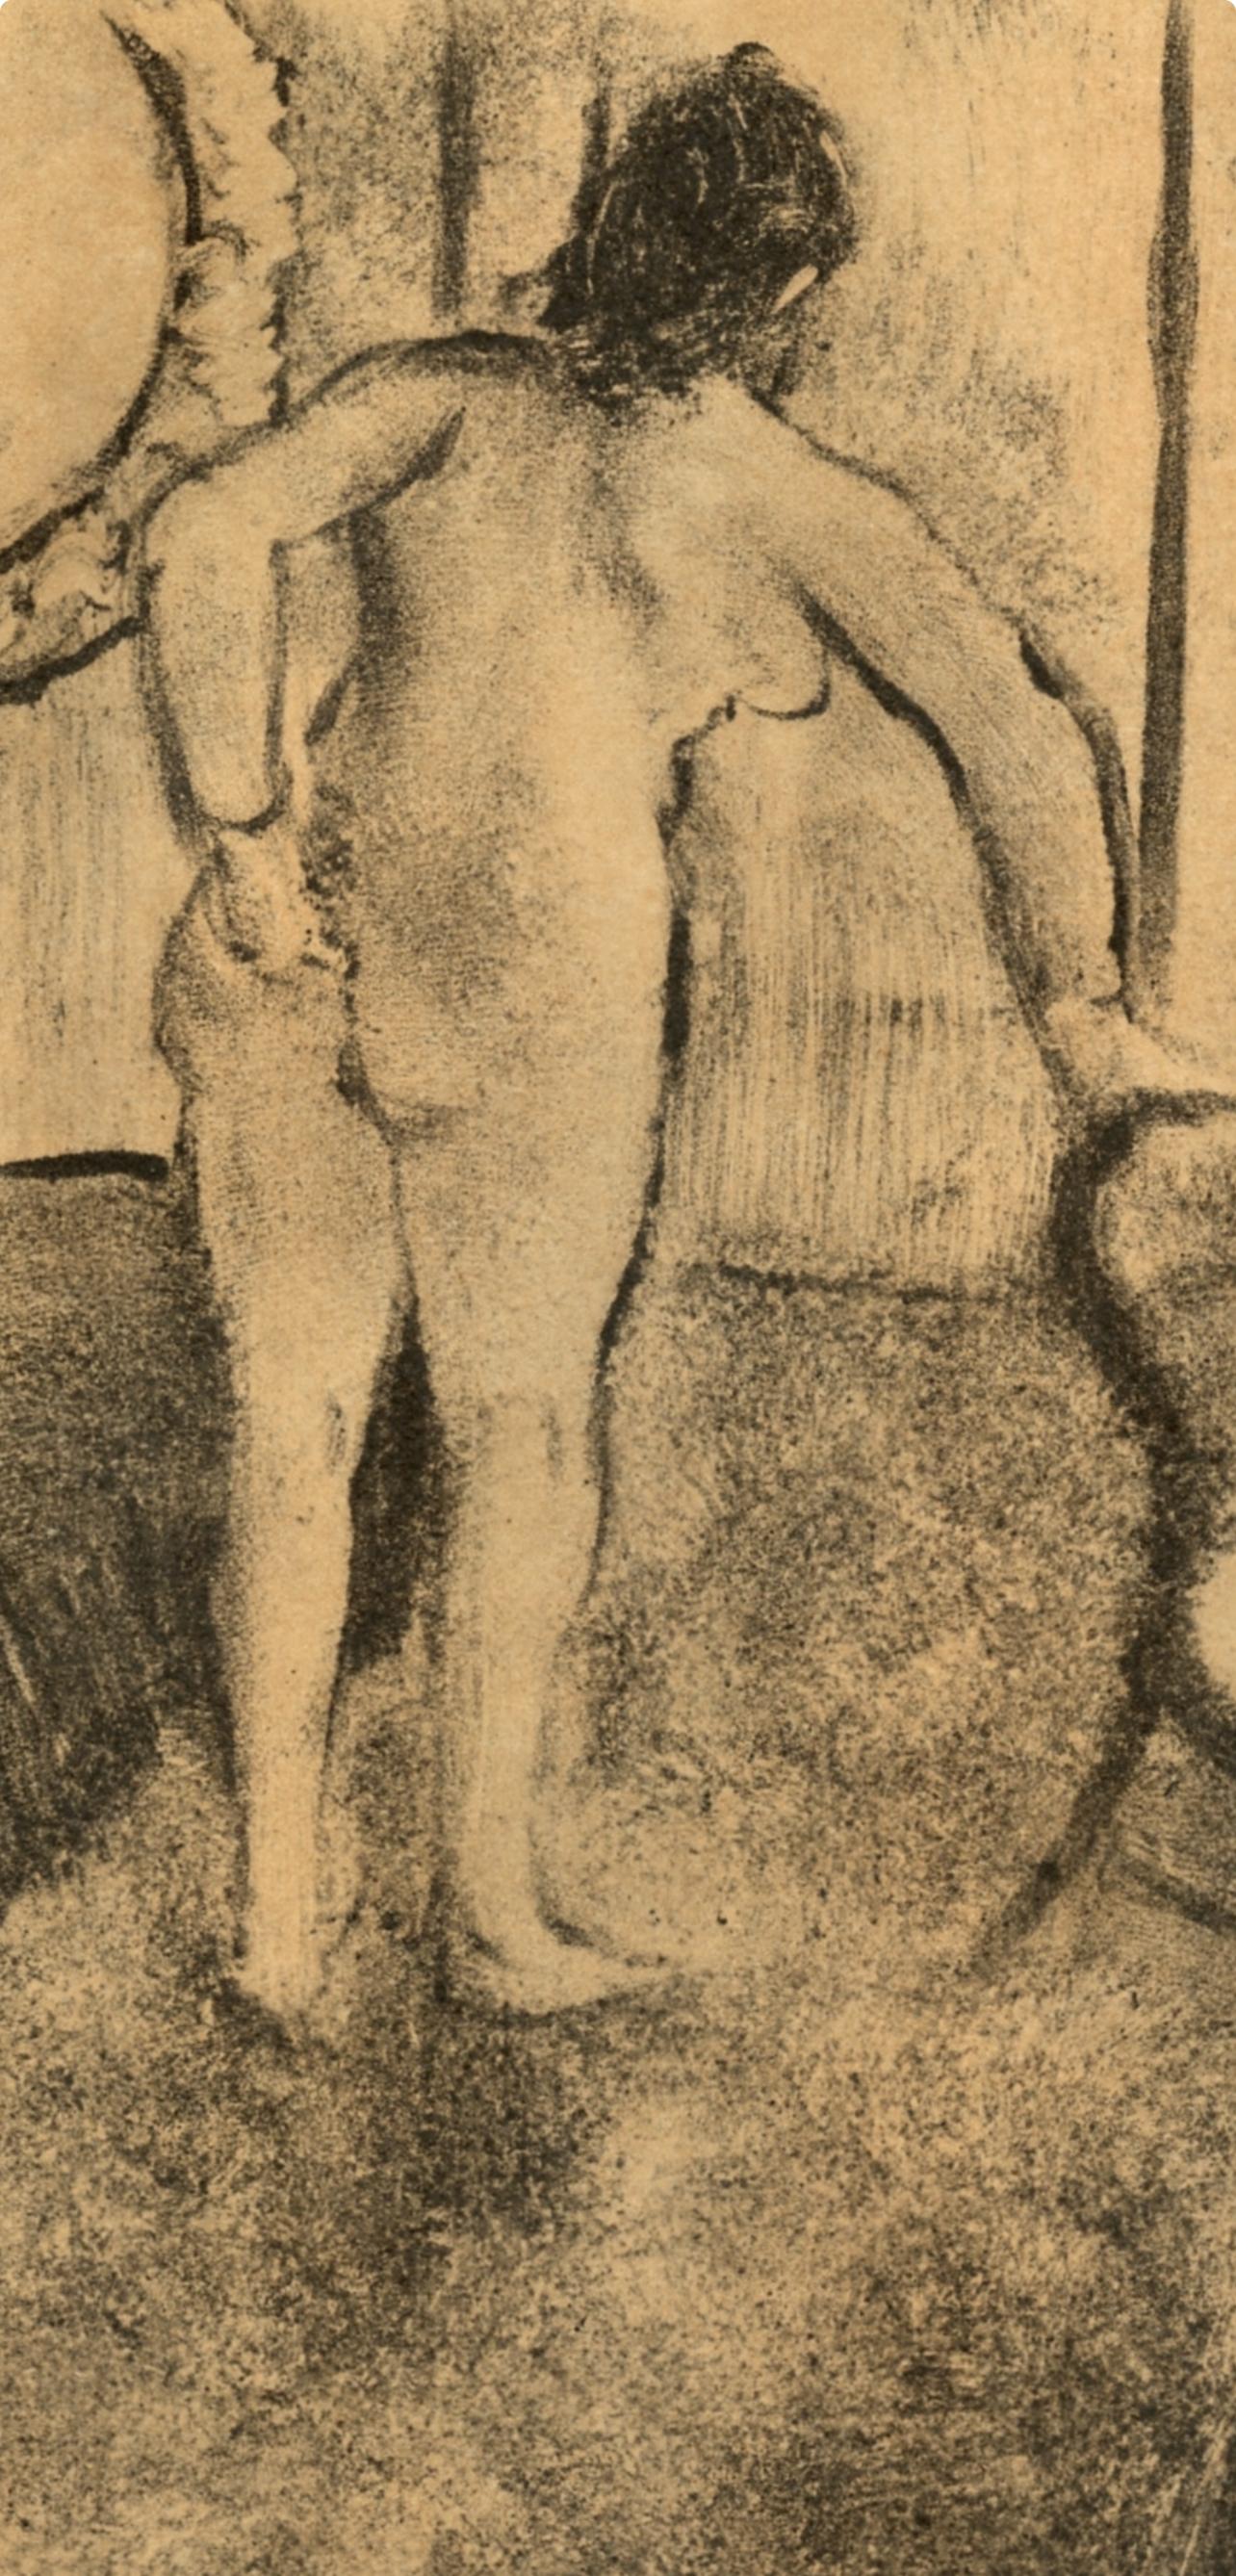 Degas, Nu debout, Les Monotypes (after) - Print by Edgar Degas